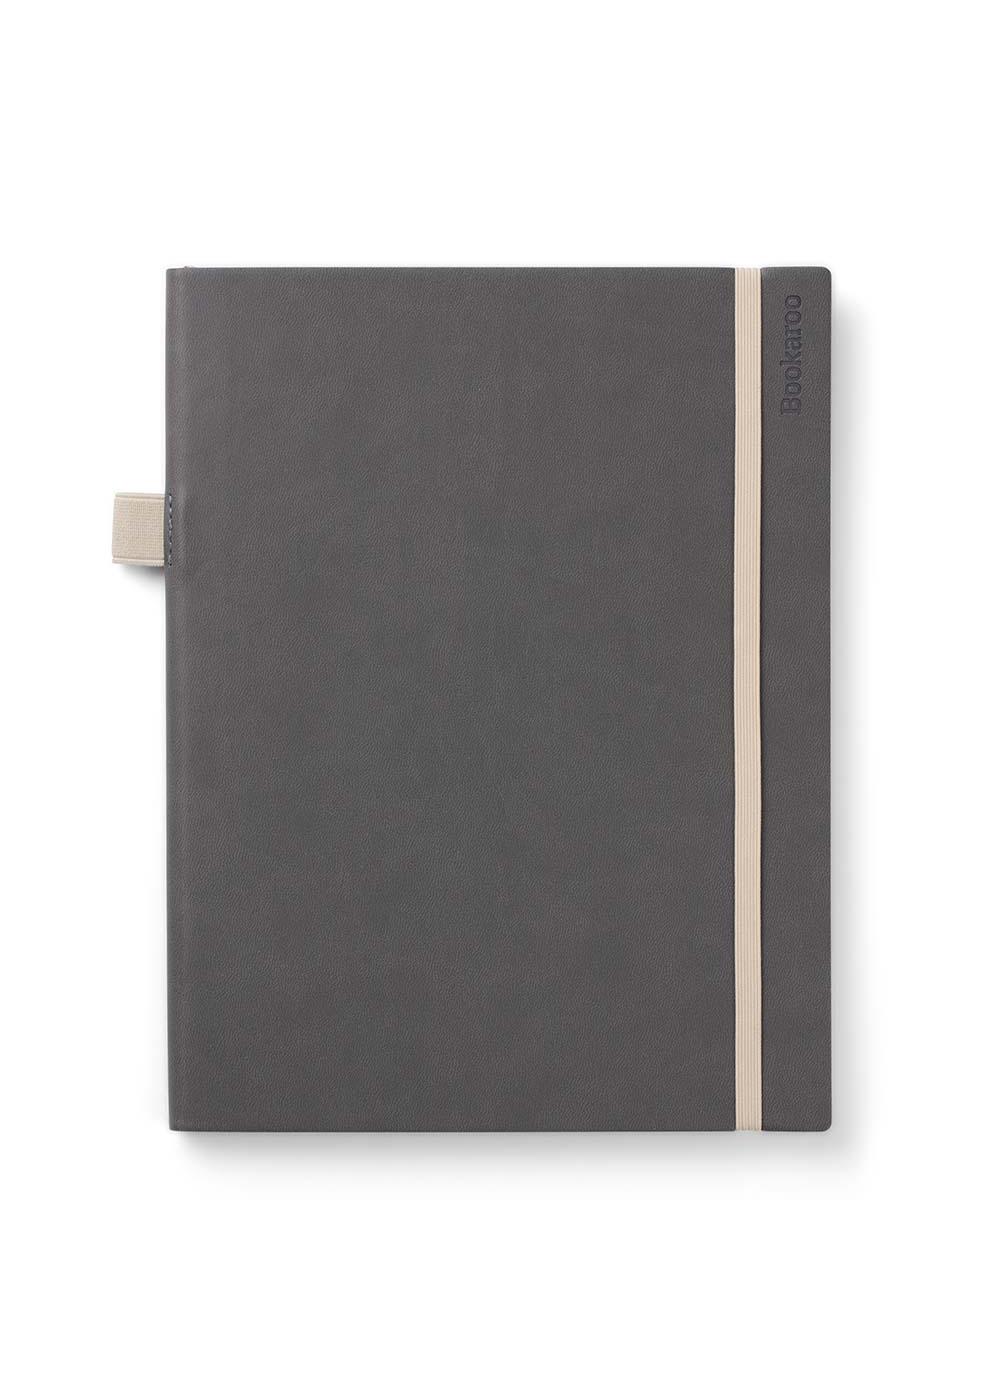 Bookaroo Bigger Things Notebook - Charcoal; image 2 of 2